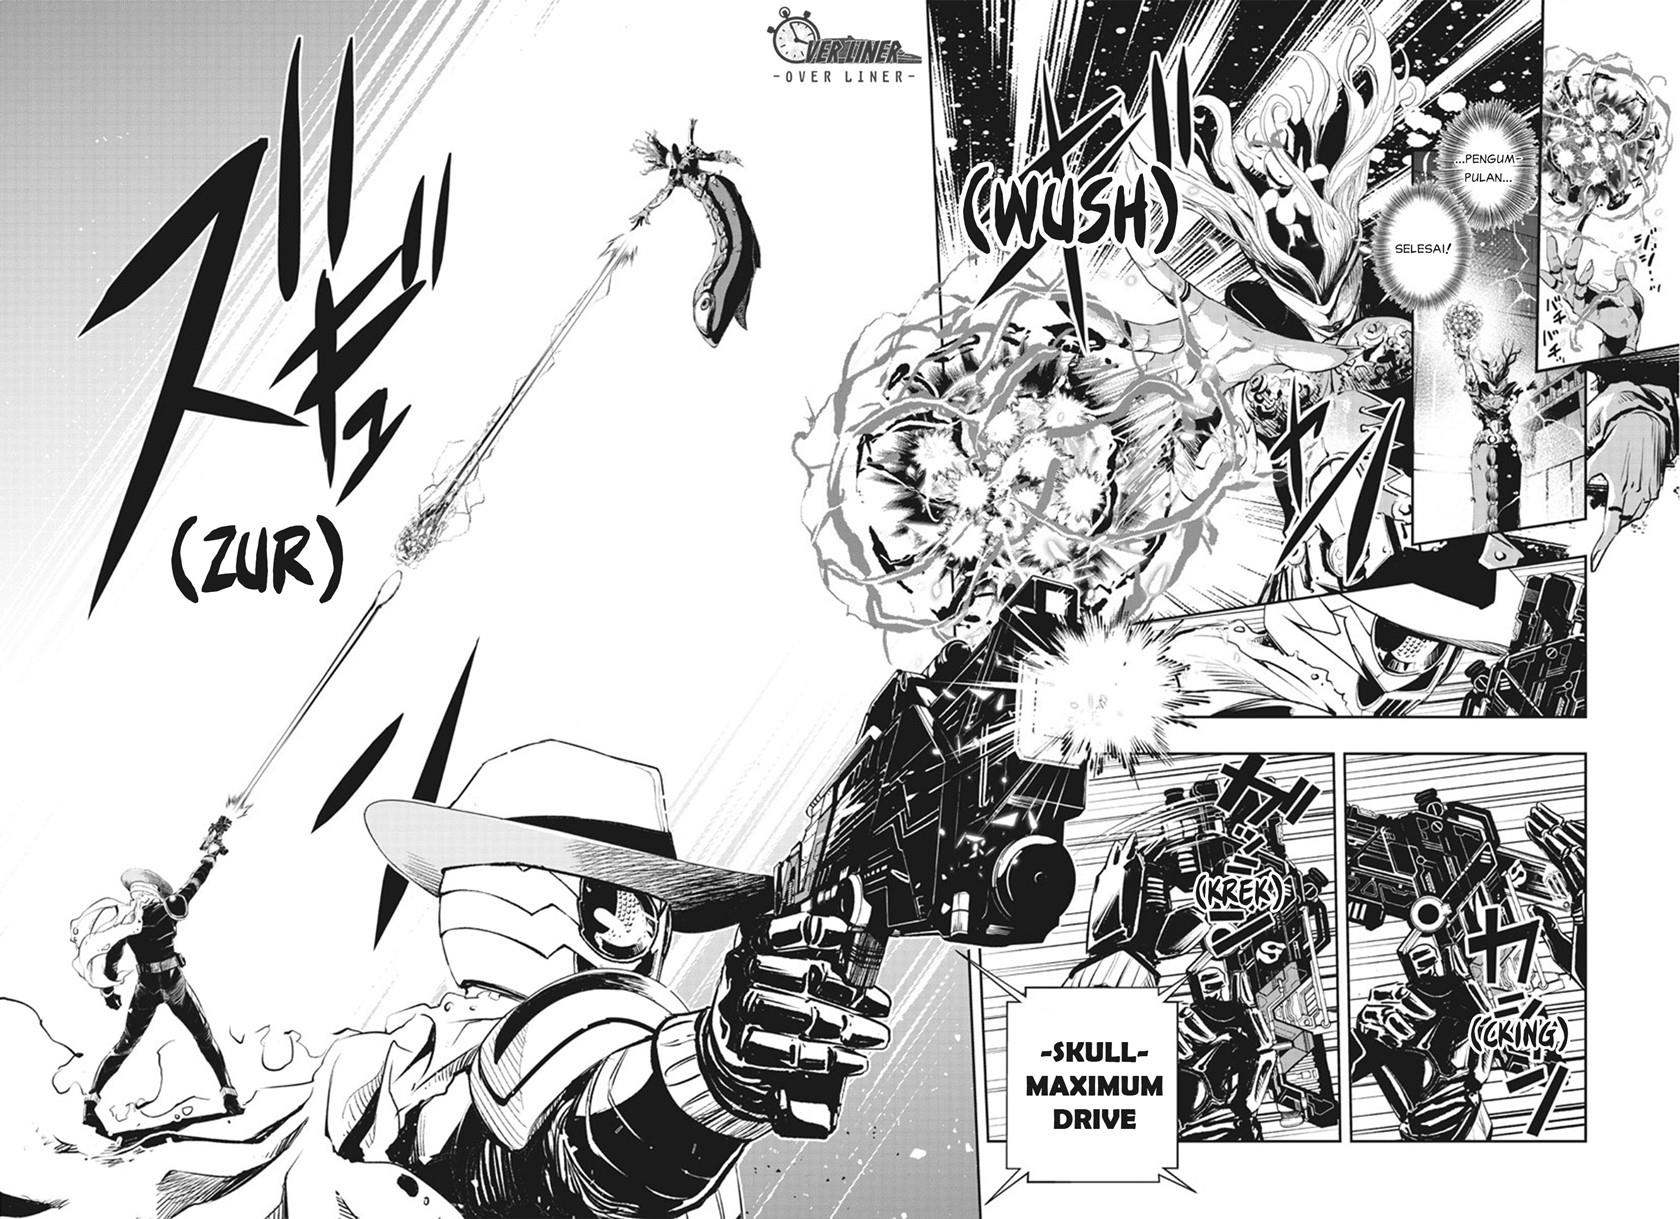 Kamen Rider W: Fuuto Tantei Chapter 52